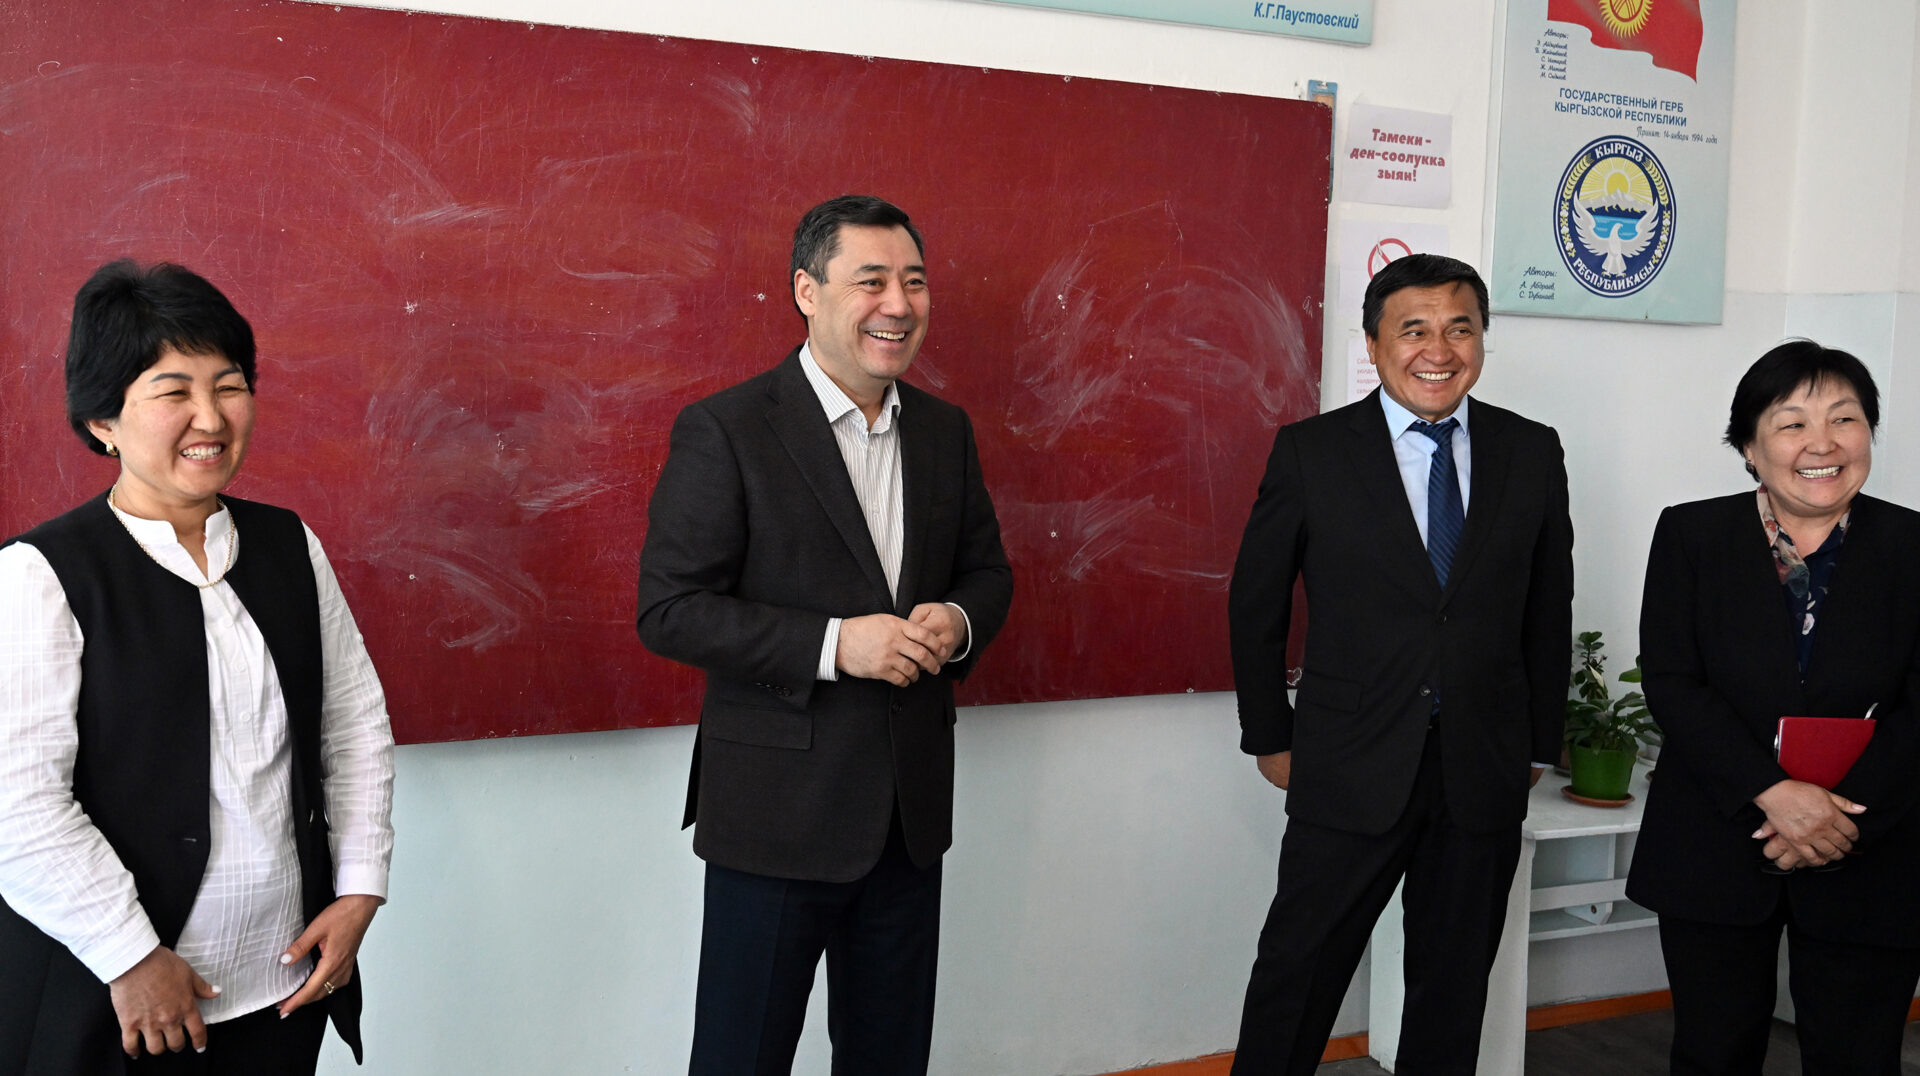 DOS 3539 Президент внепланово посетил одну из школ Бишкека и посидел на уроке - фото